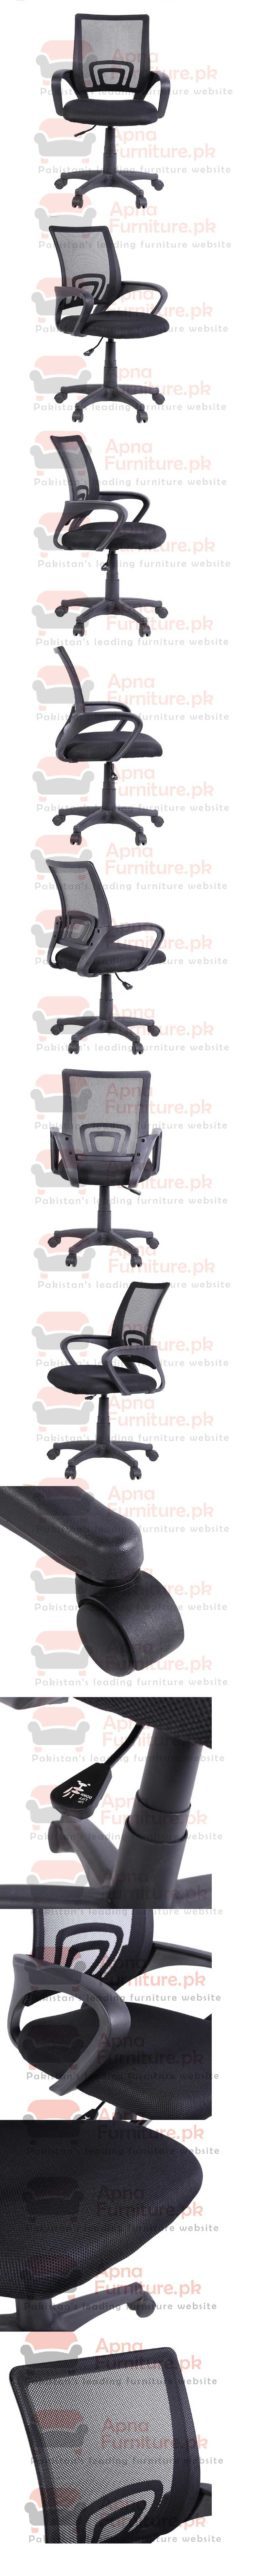 Cherry Office Chair by Apnafurniture.pk